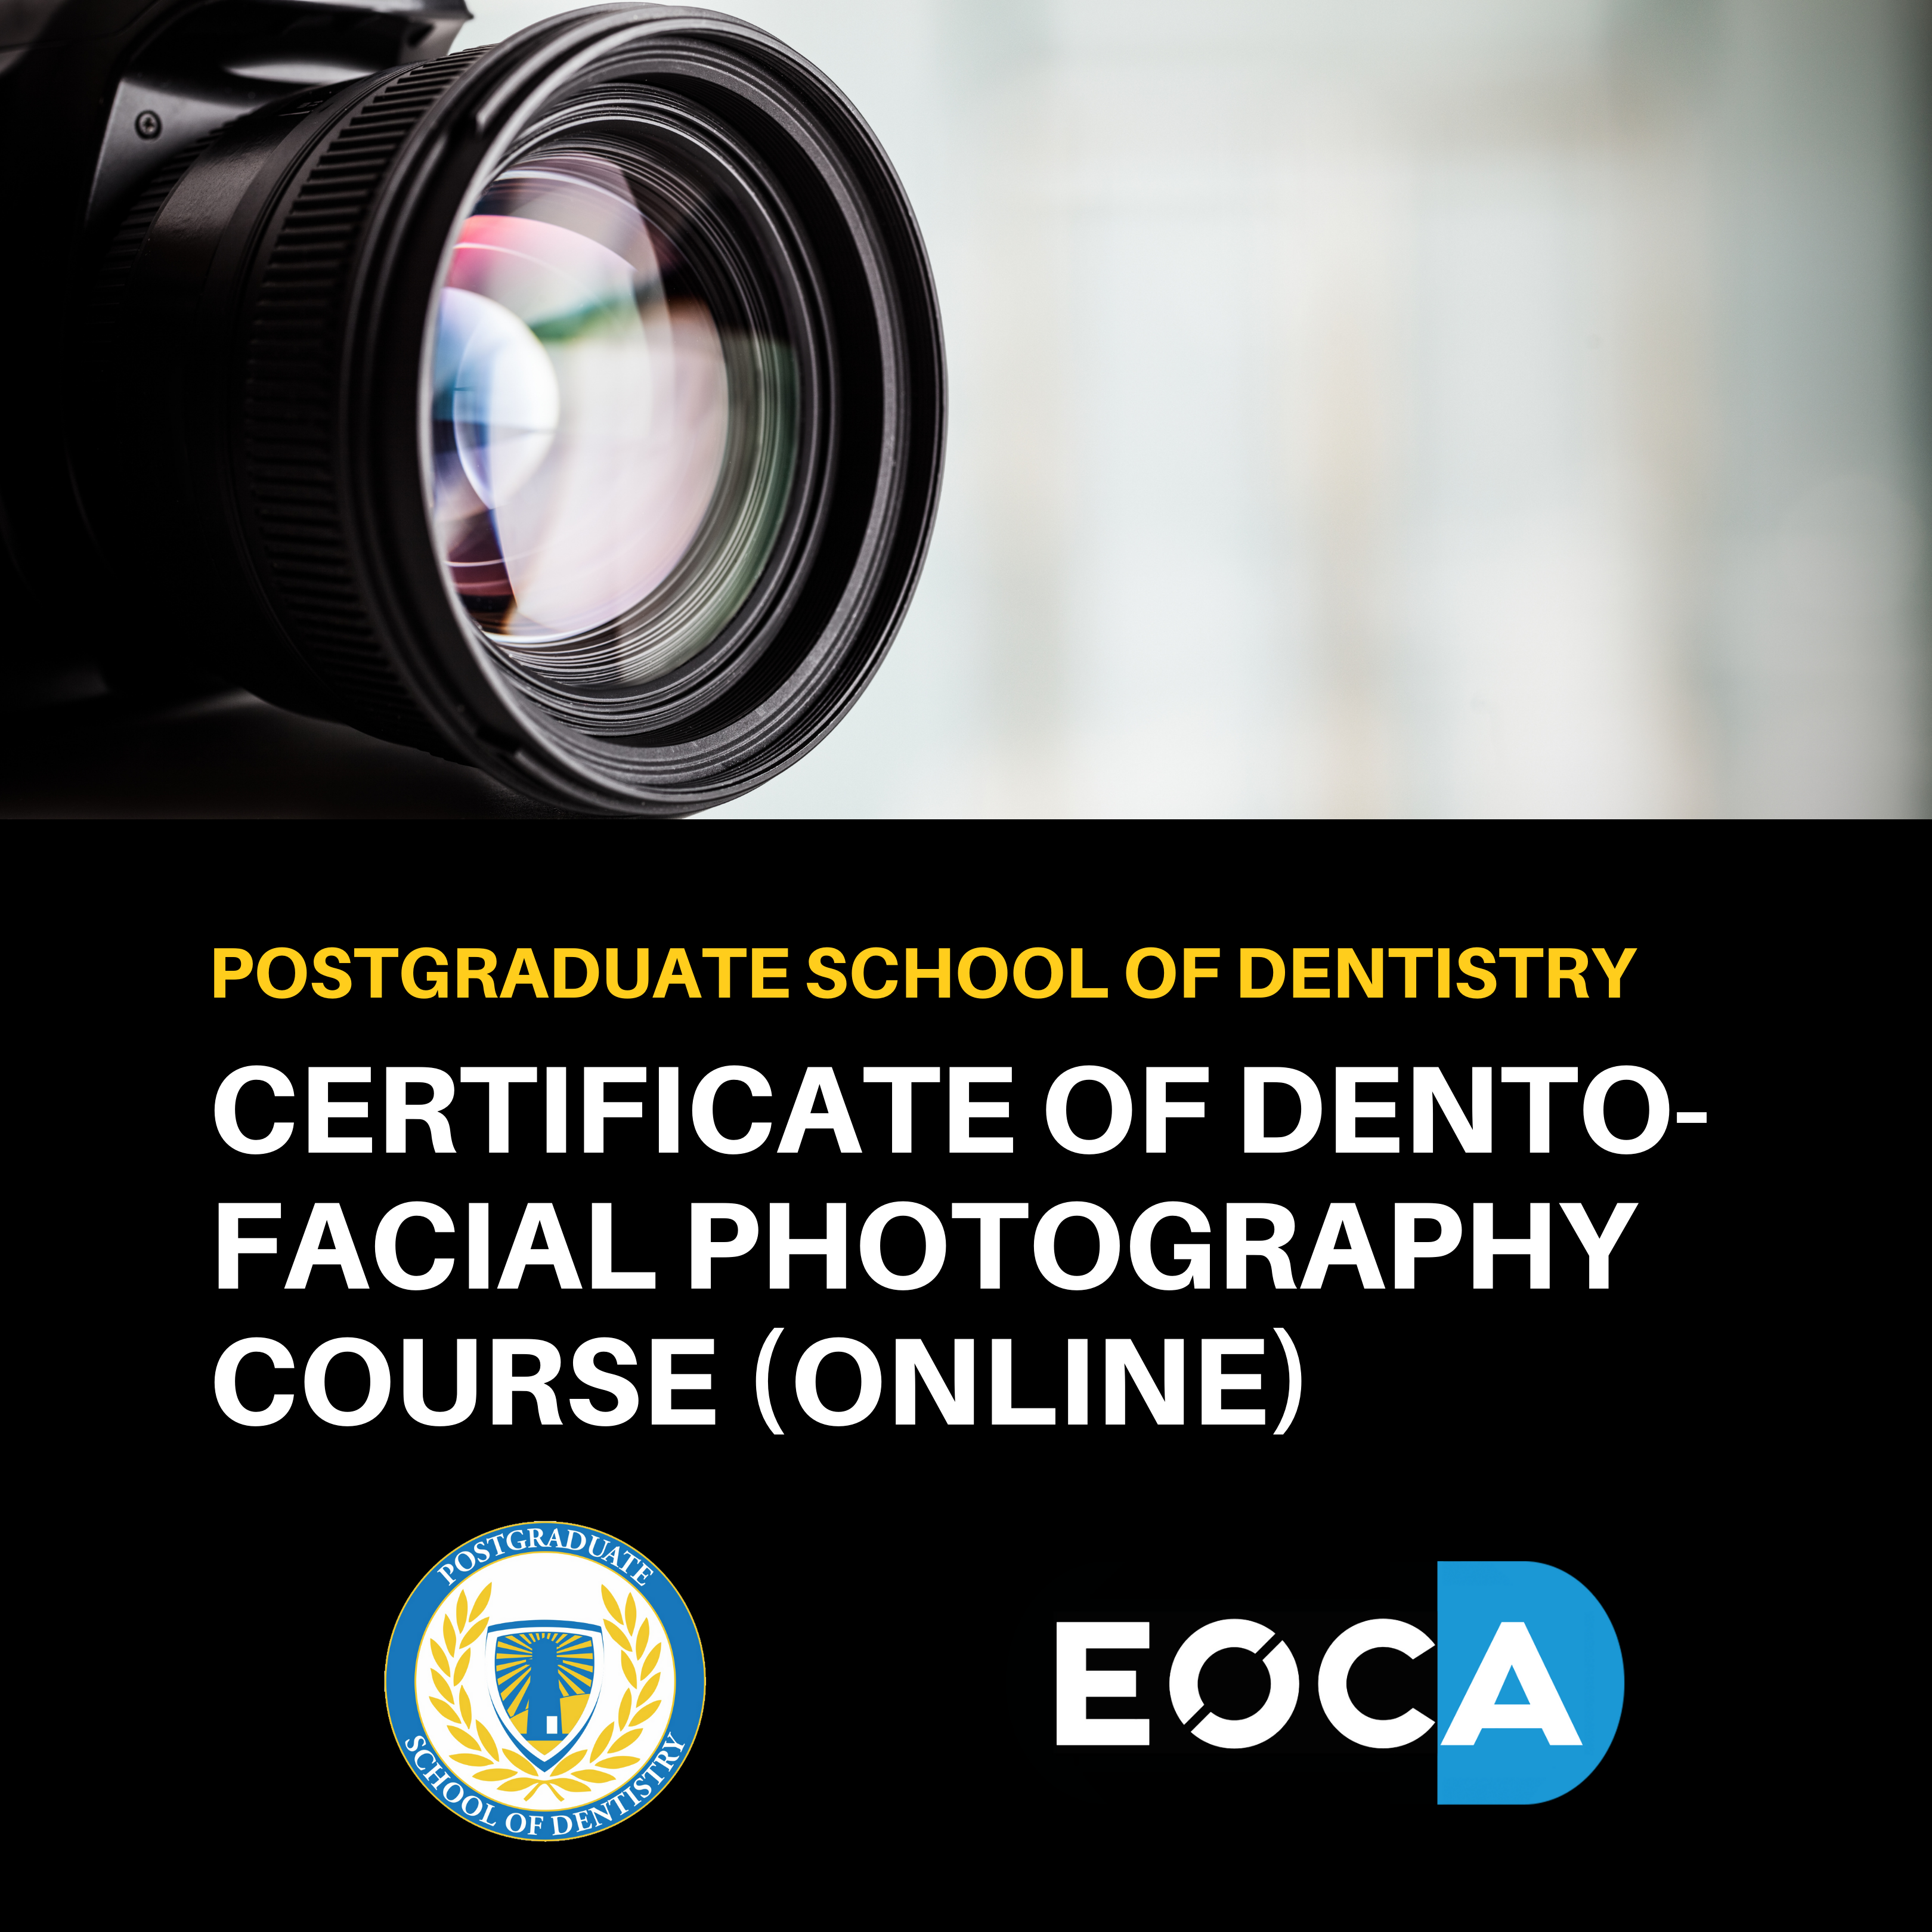 Certificate of Dental-Facial Photography Course